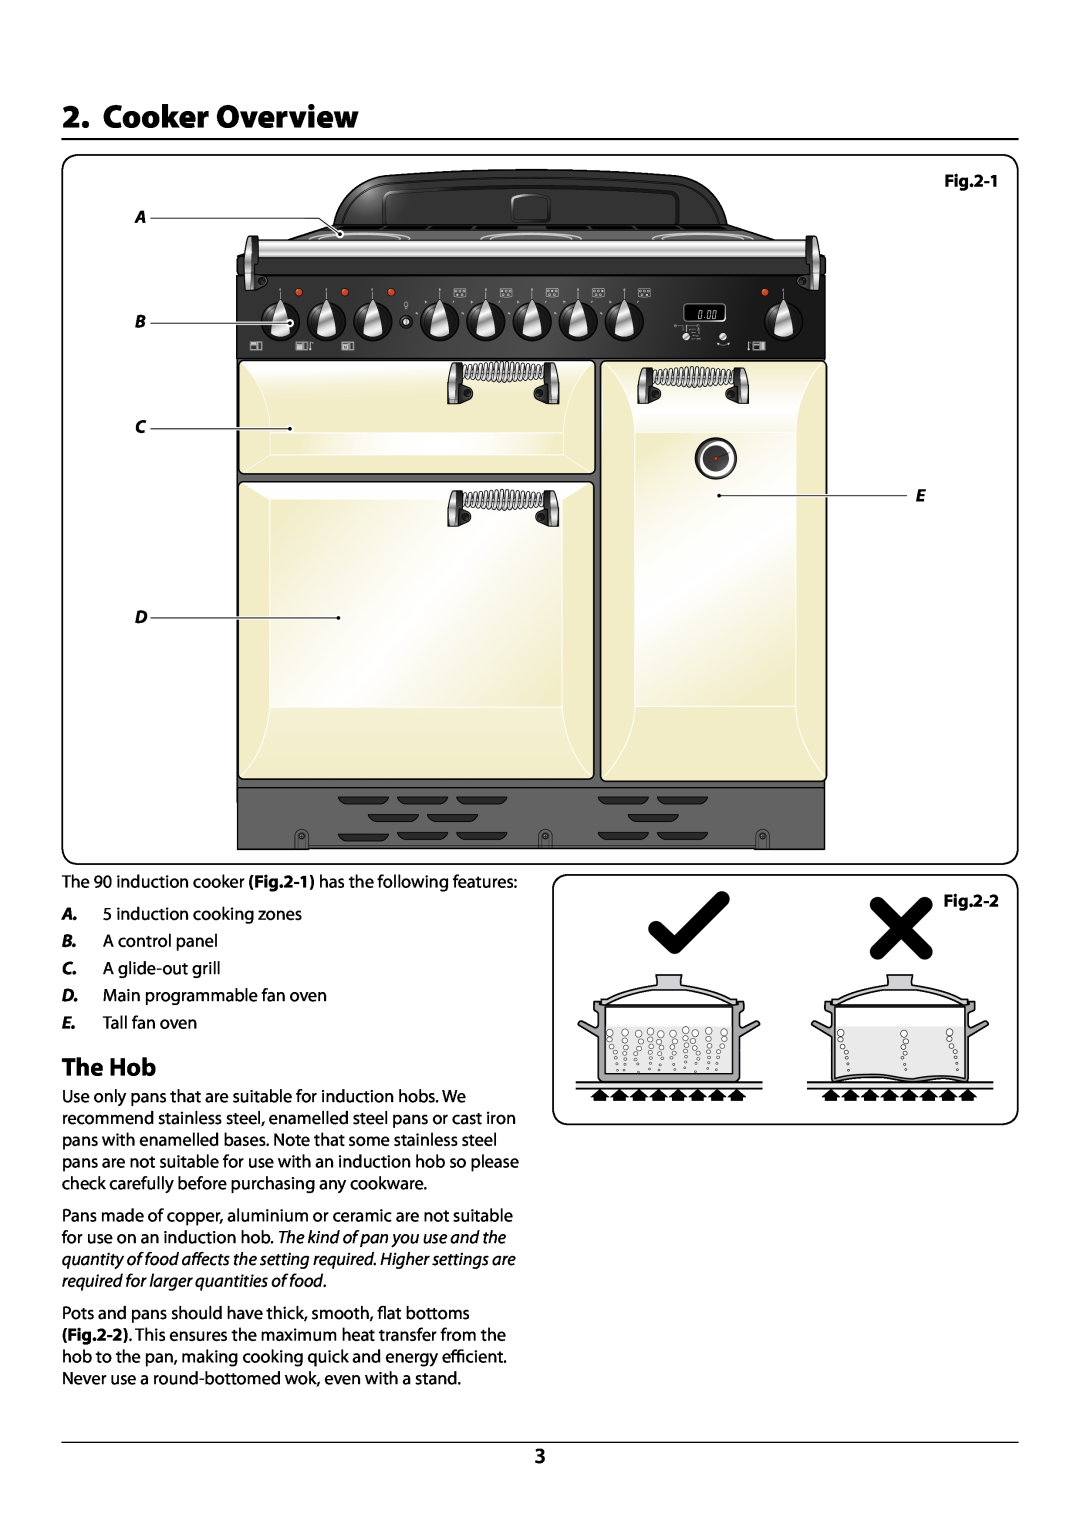 Rangemaster U109987 - 01 manual Cooker Overview, The Hob 